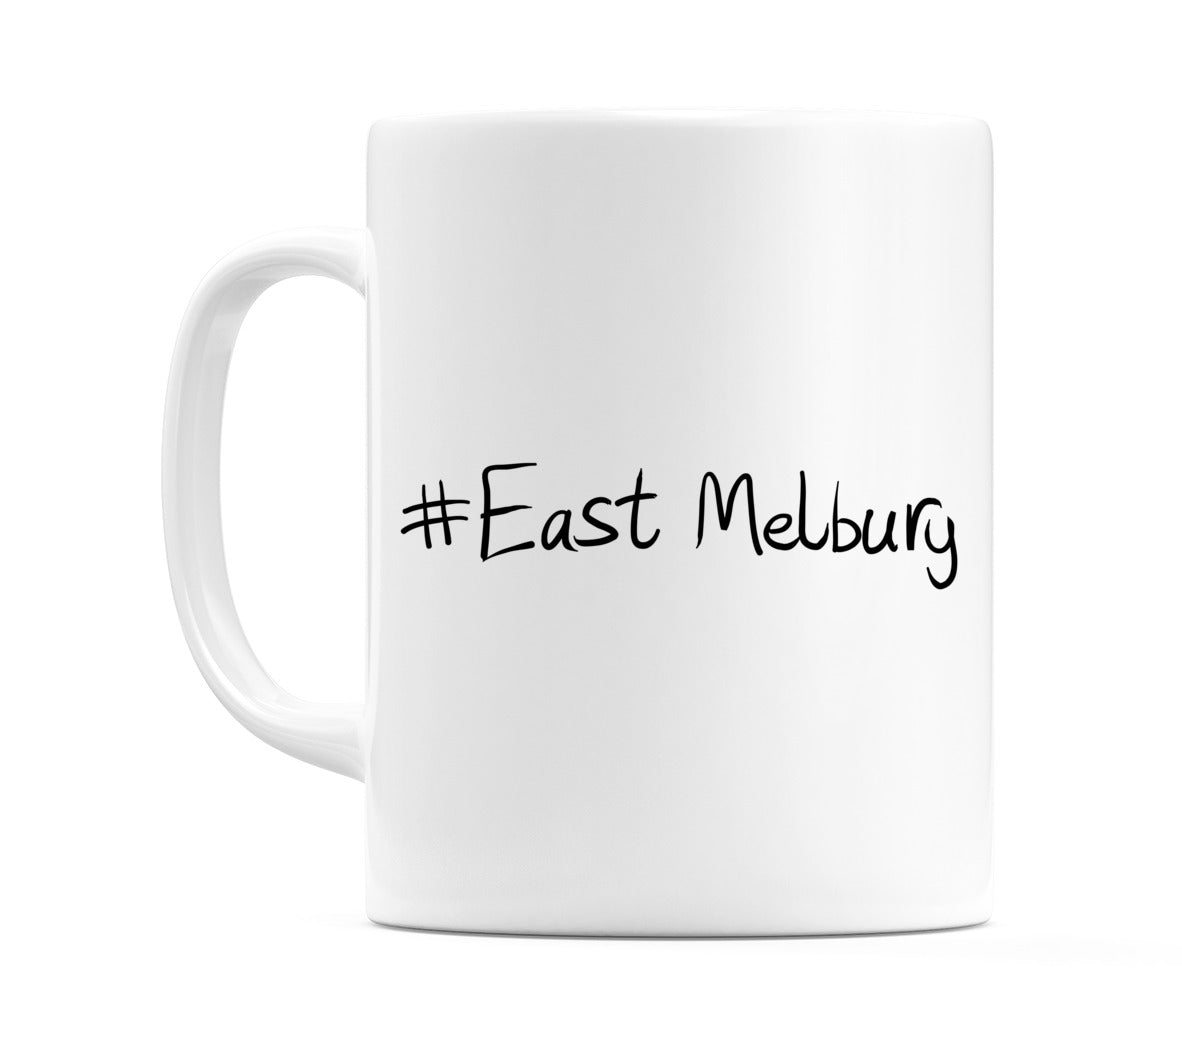 #East Melbury Mug